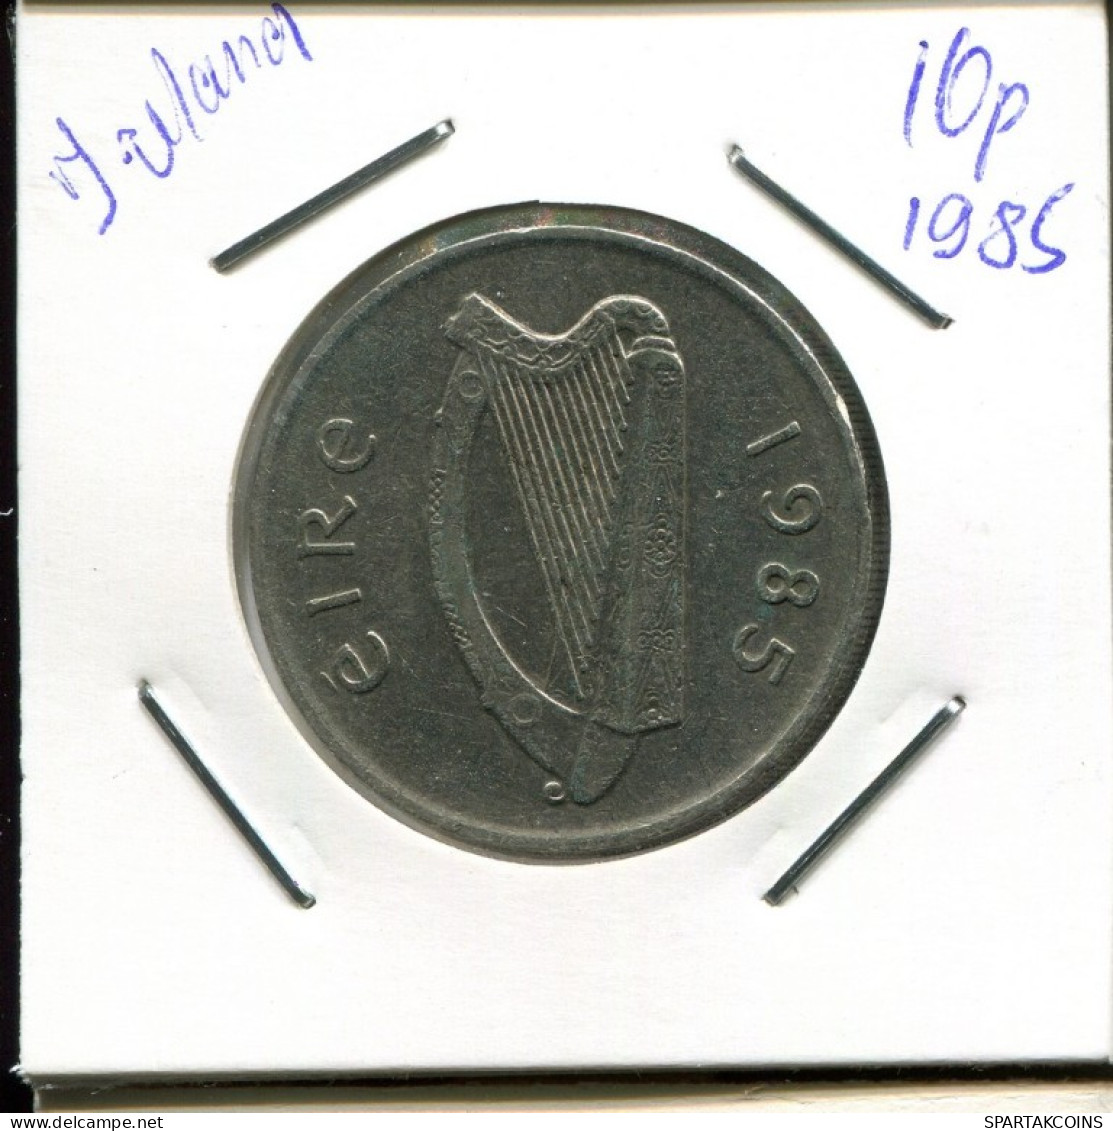 10 PENCE 1985 IRLANDA IRELAND Moneda #AN610.E.A - Ierland